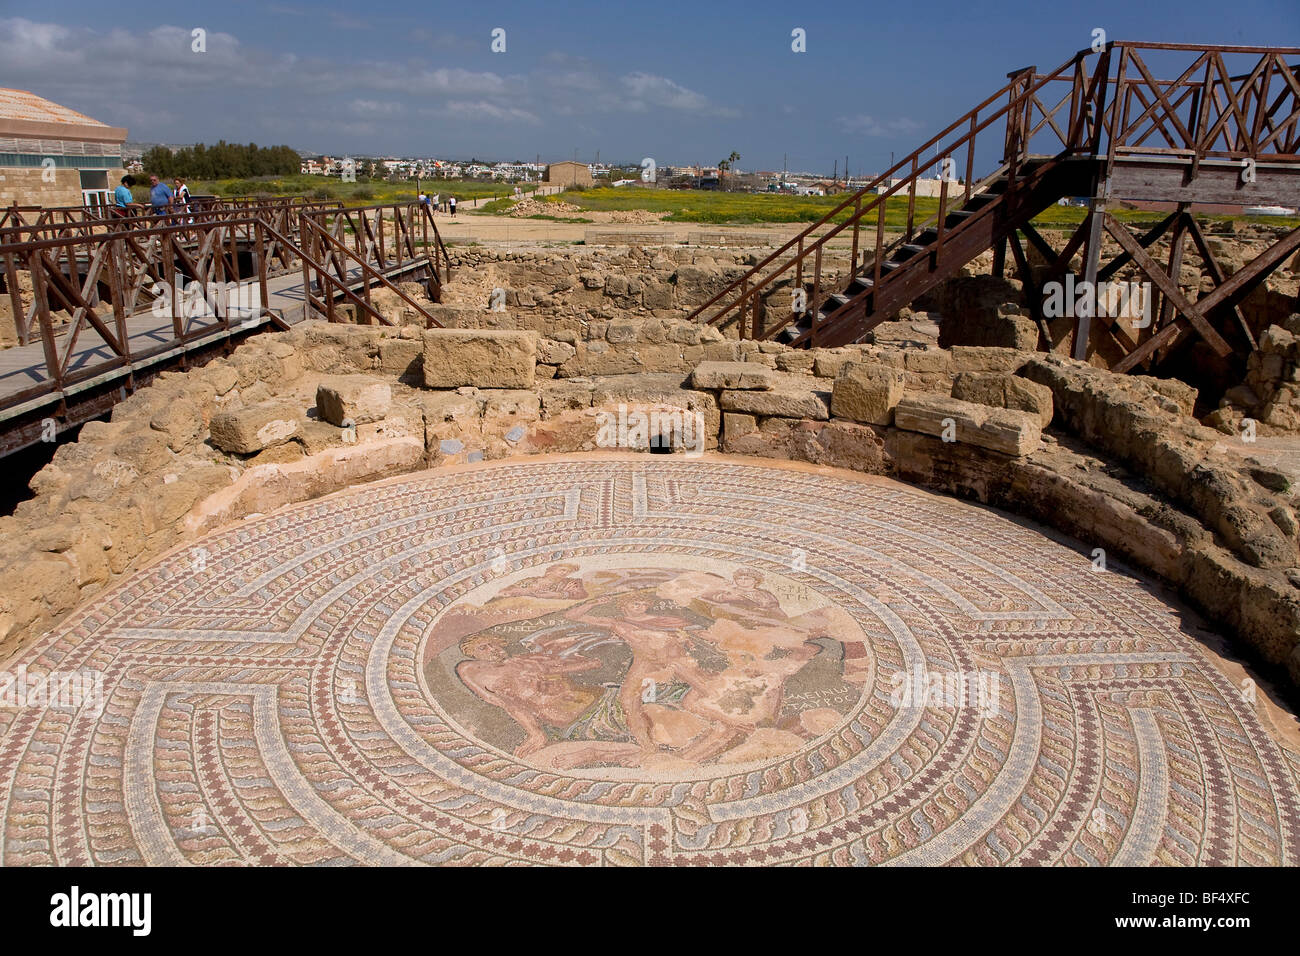 Kourion sito archeologico, mosaico, Limassol, Cipro, Grecia, Europa Foto Stock